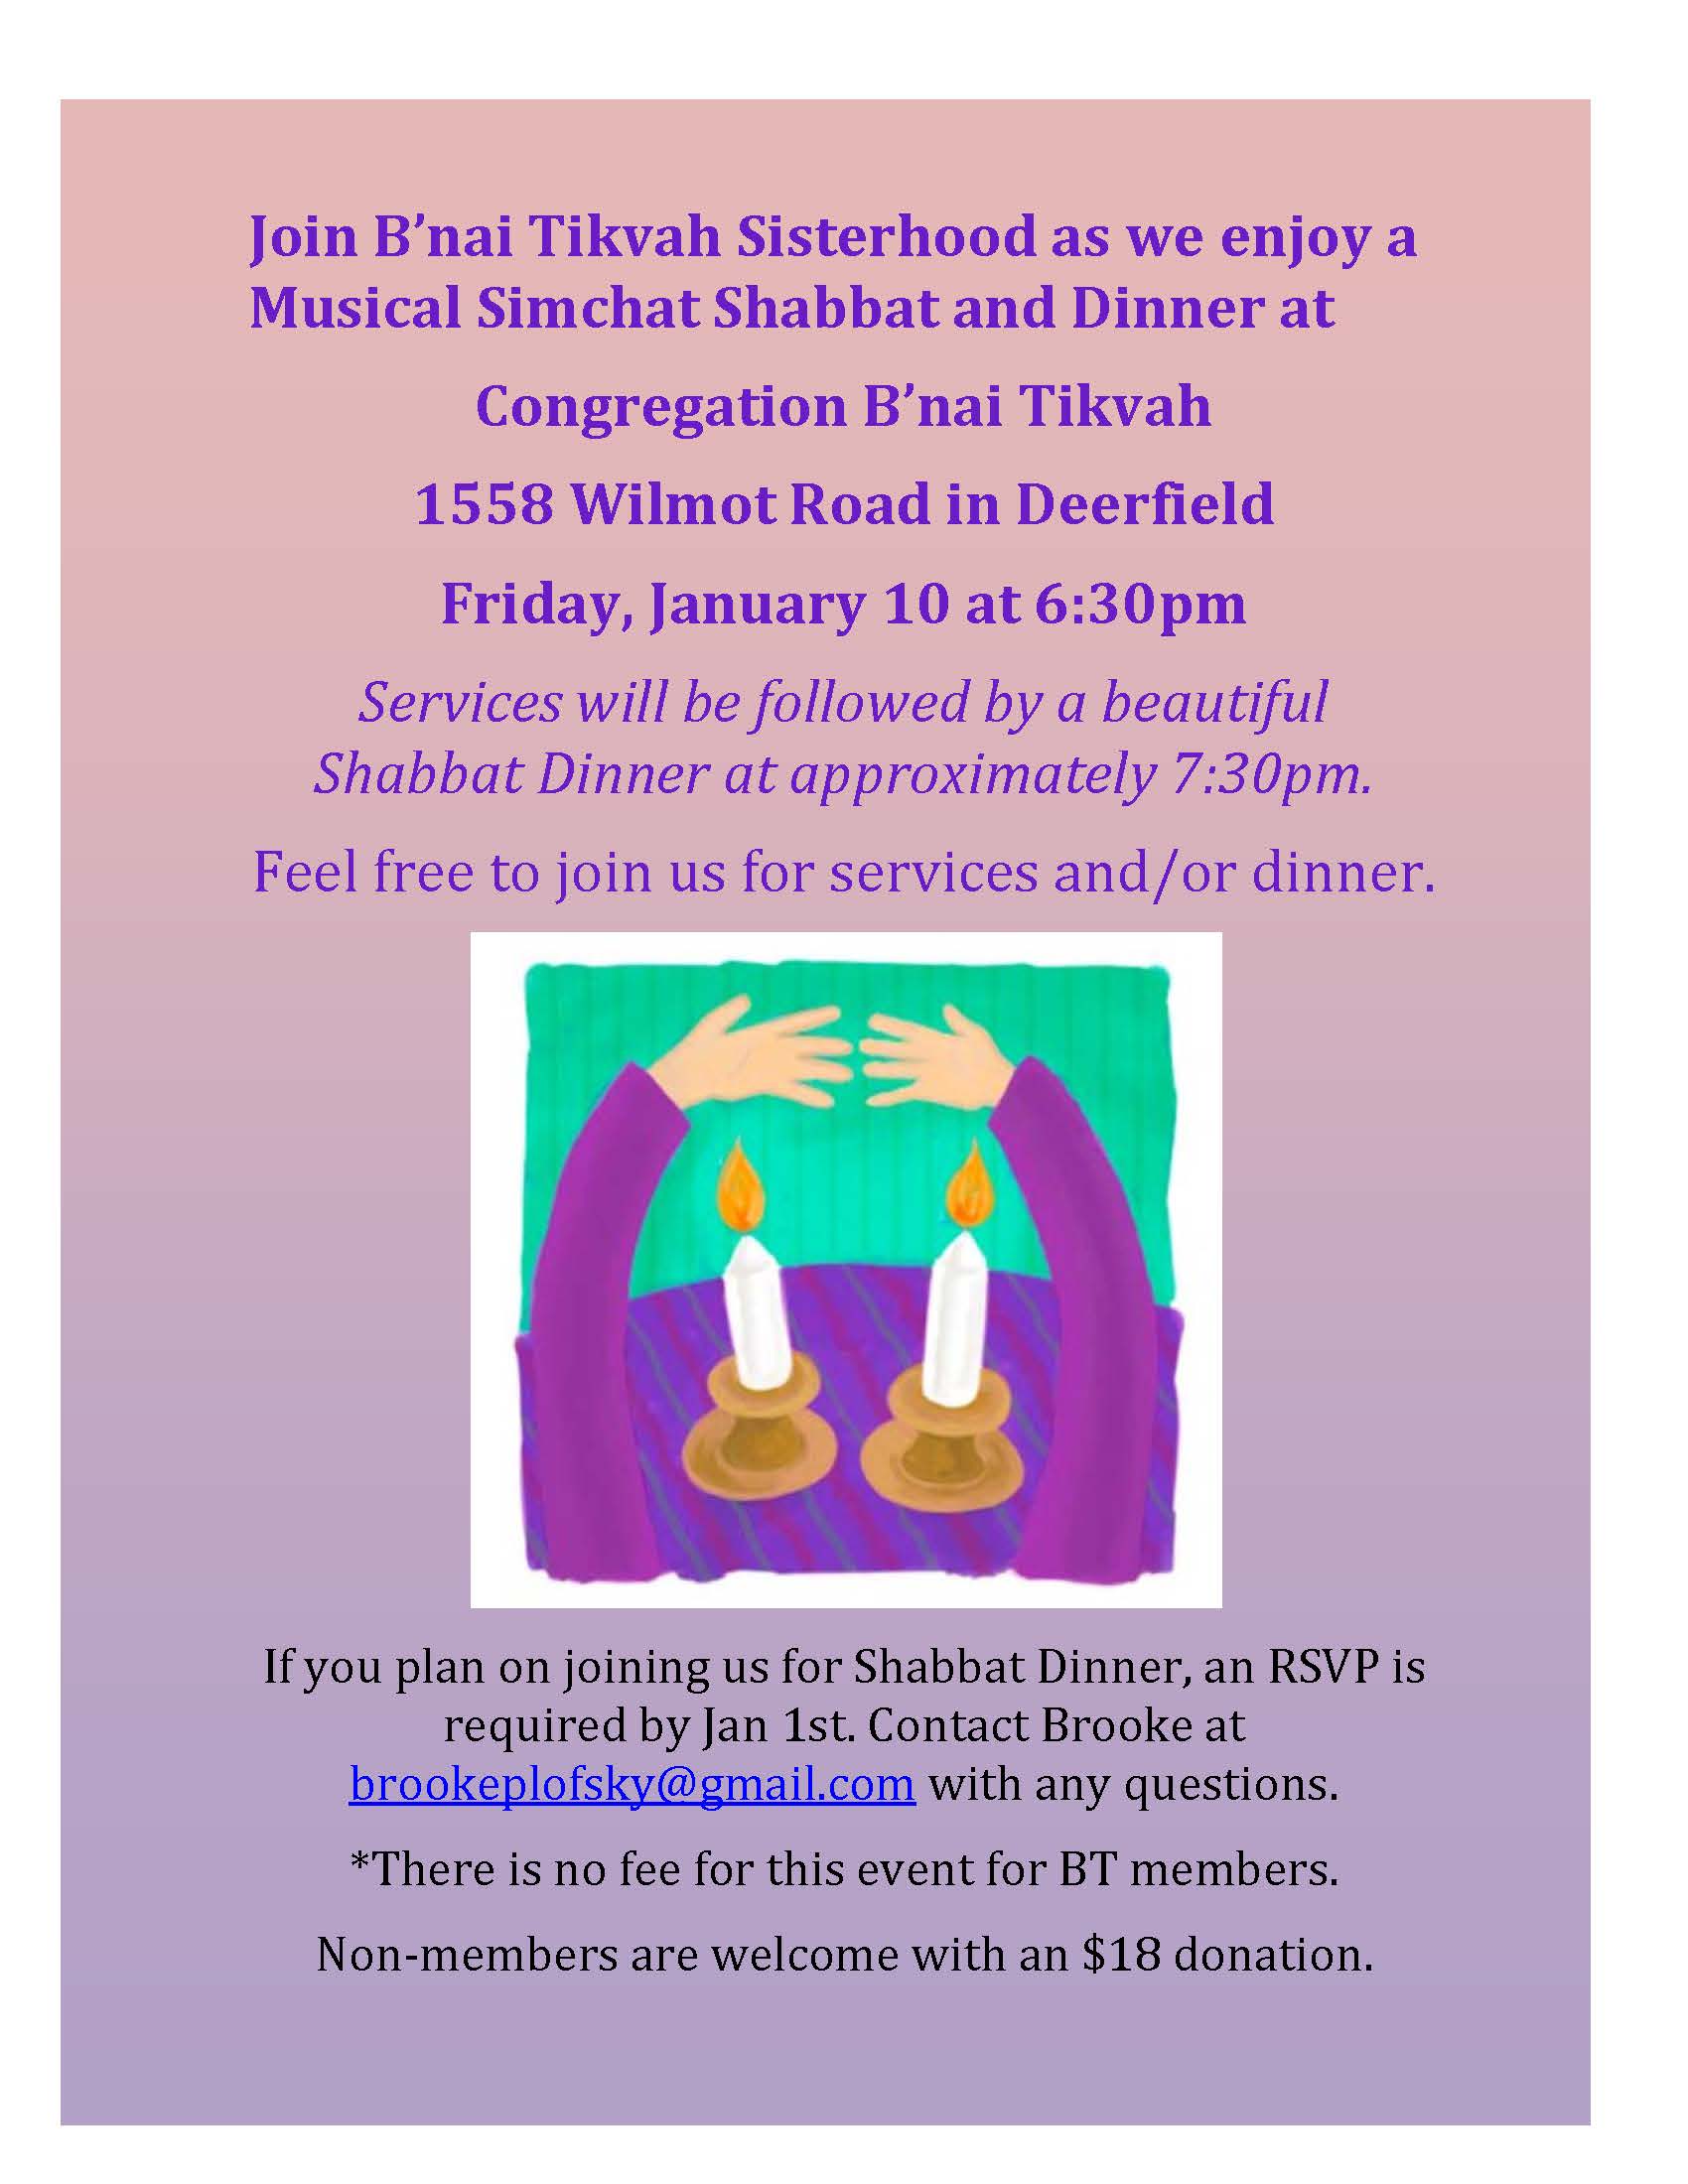 Musical Simchat Shabbat and Sisterhood Shabbat Dinner